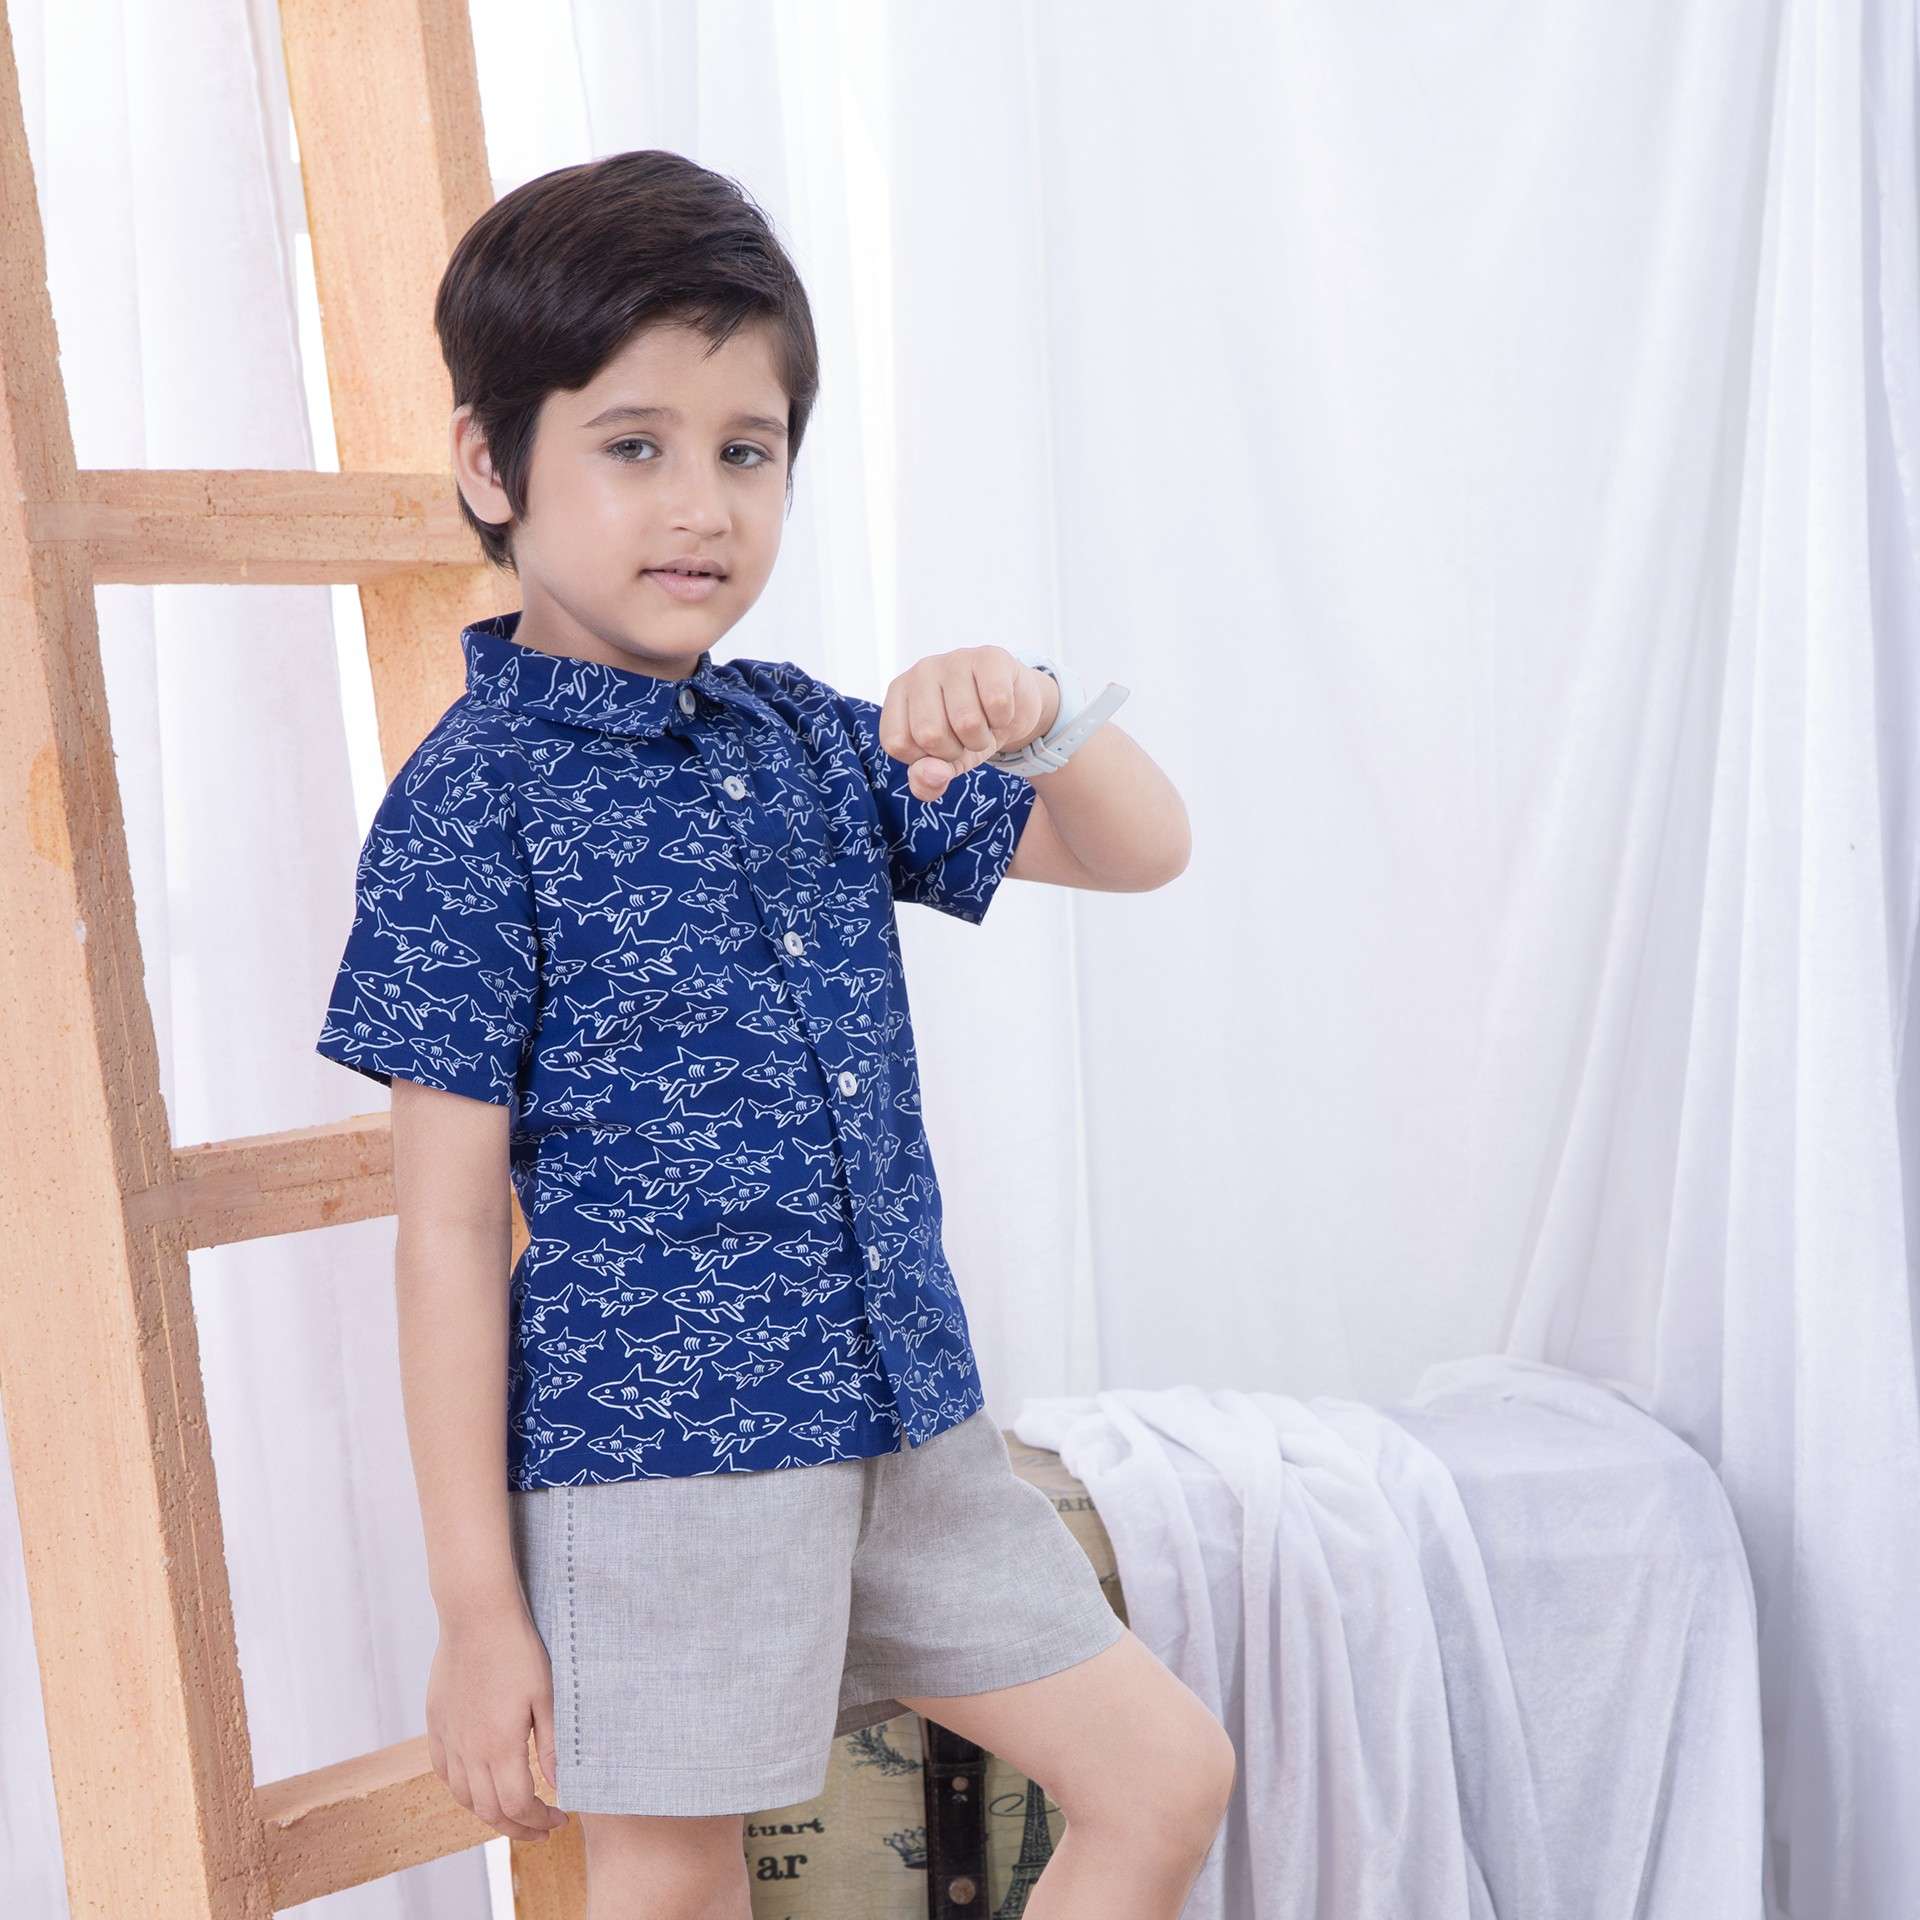 A boy posing wearing navy shark printed collared shirt